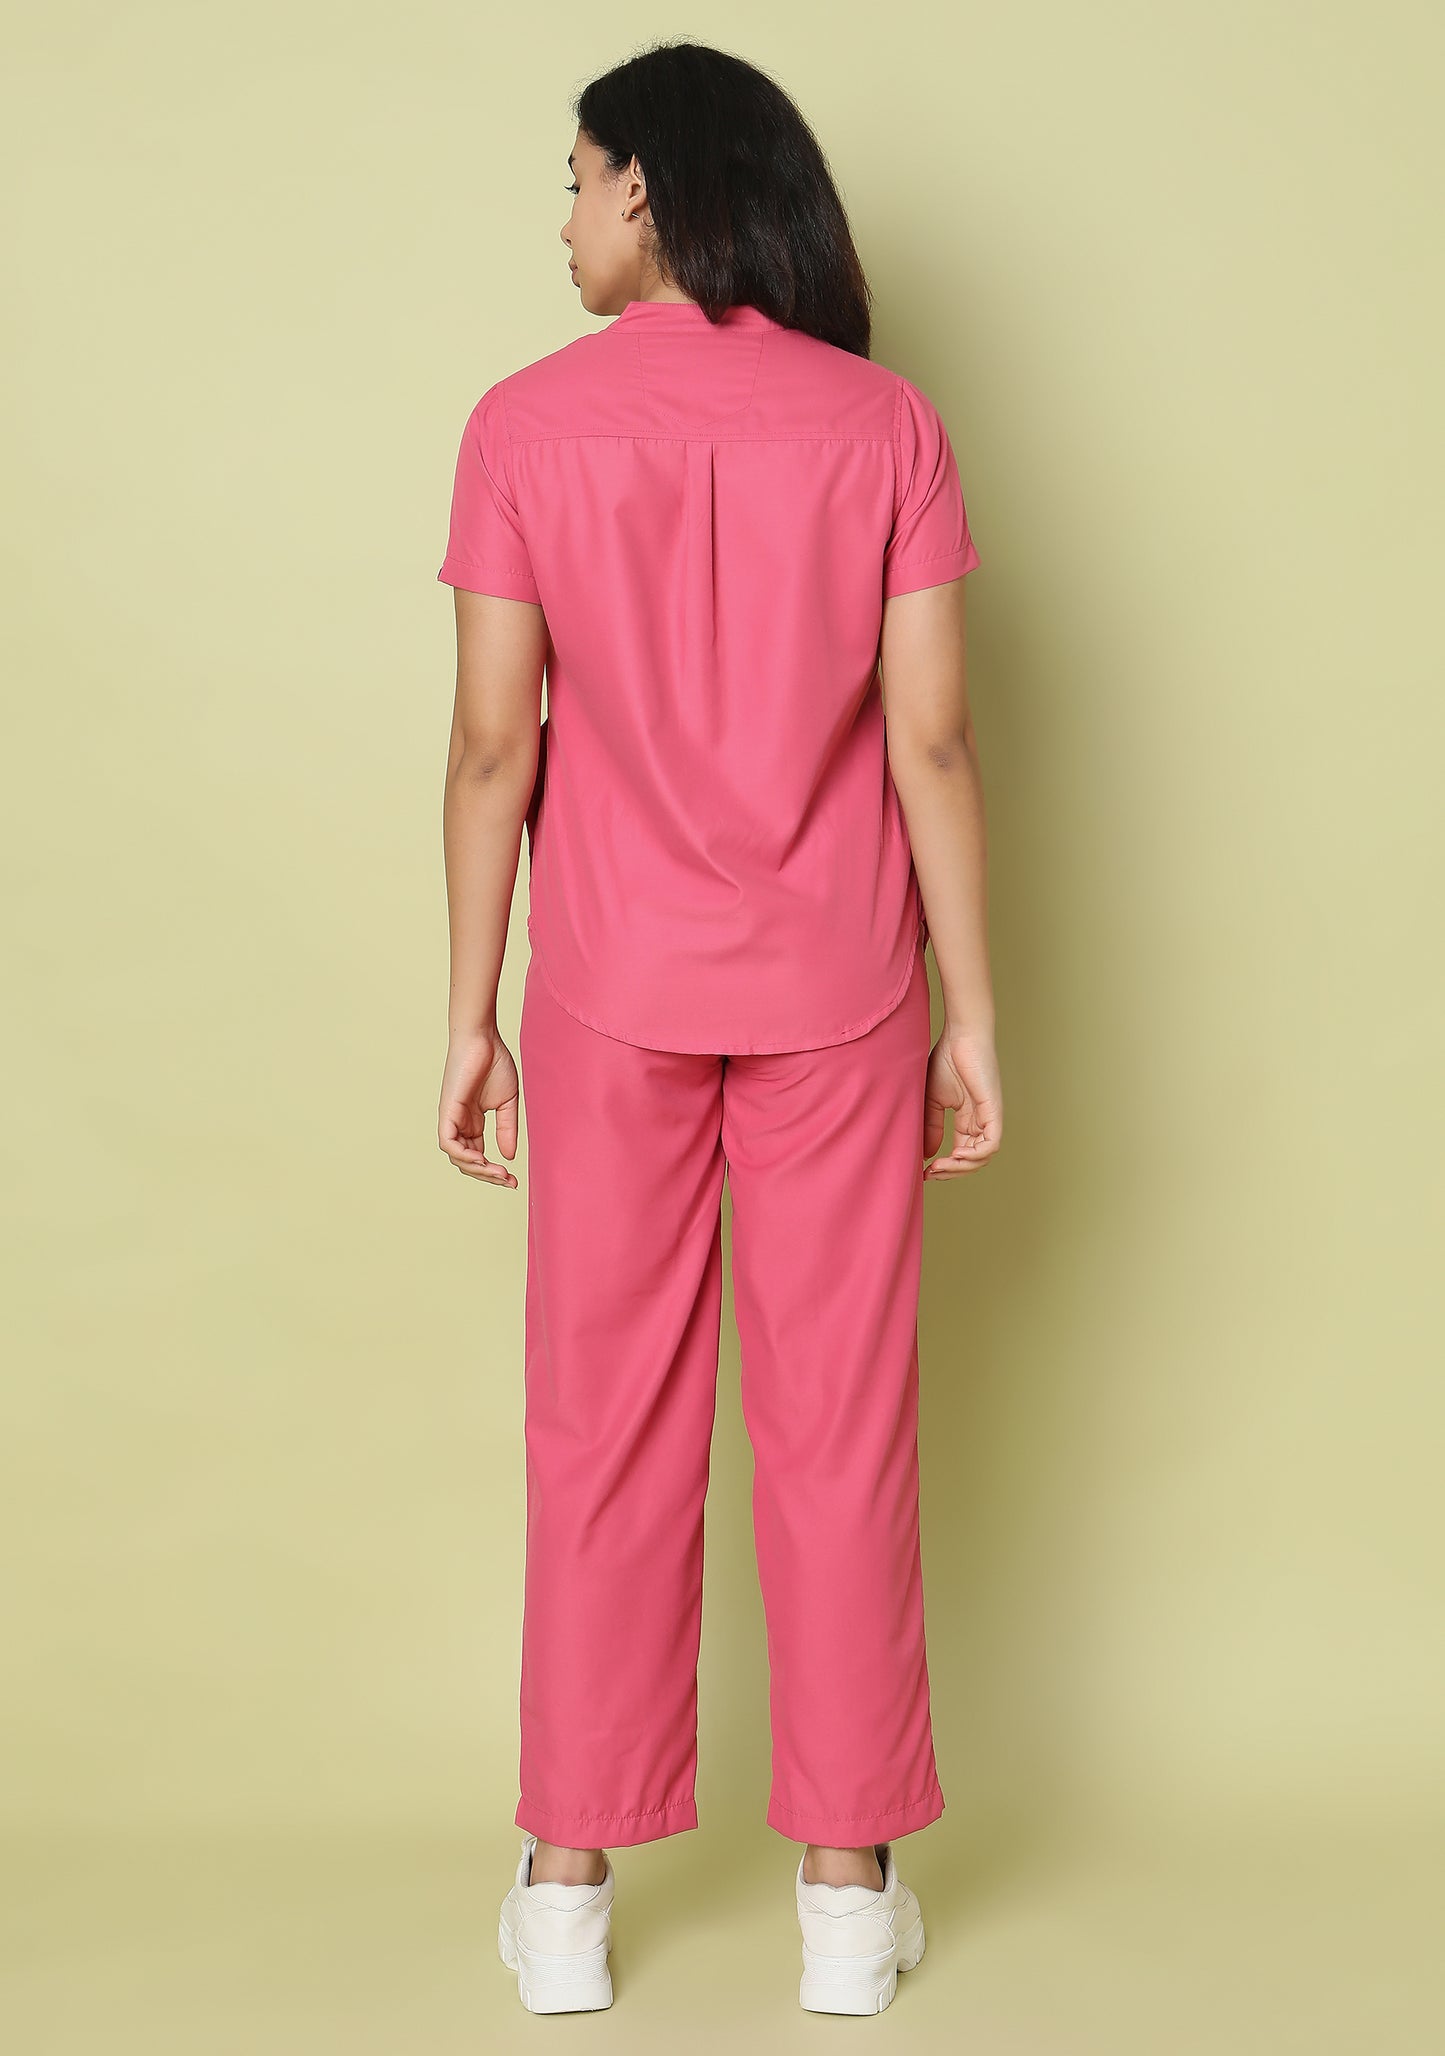 Classic Women's 5-Pocket Mandarin Collar (Hot Pink) Scrub